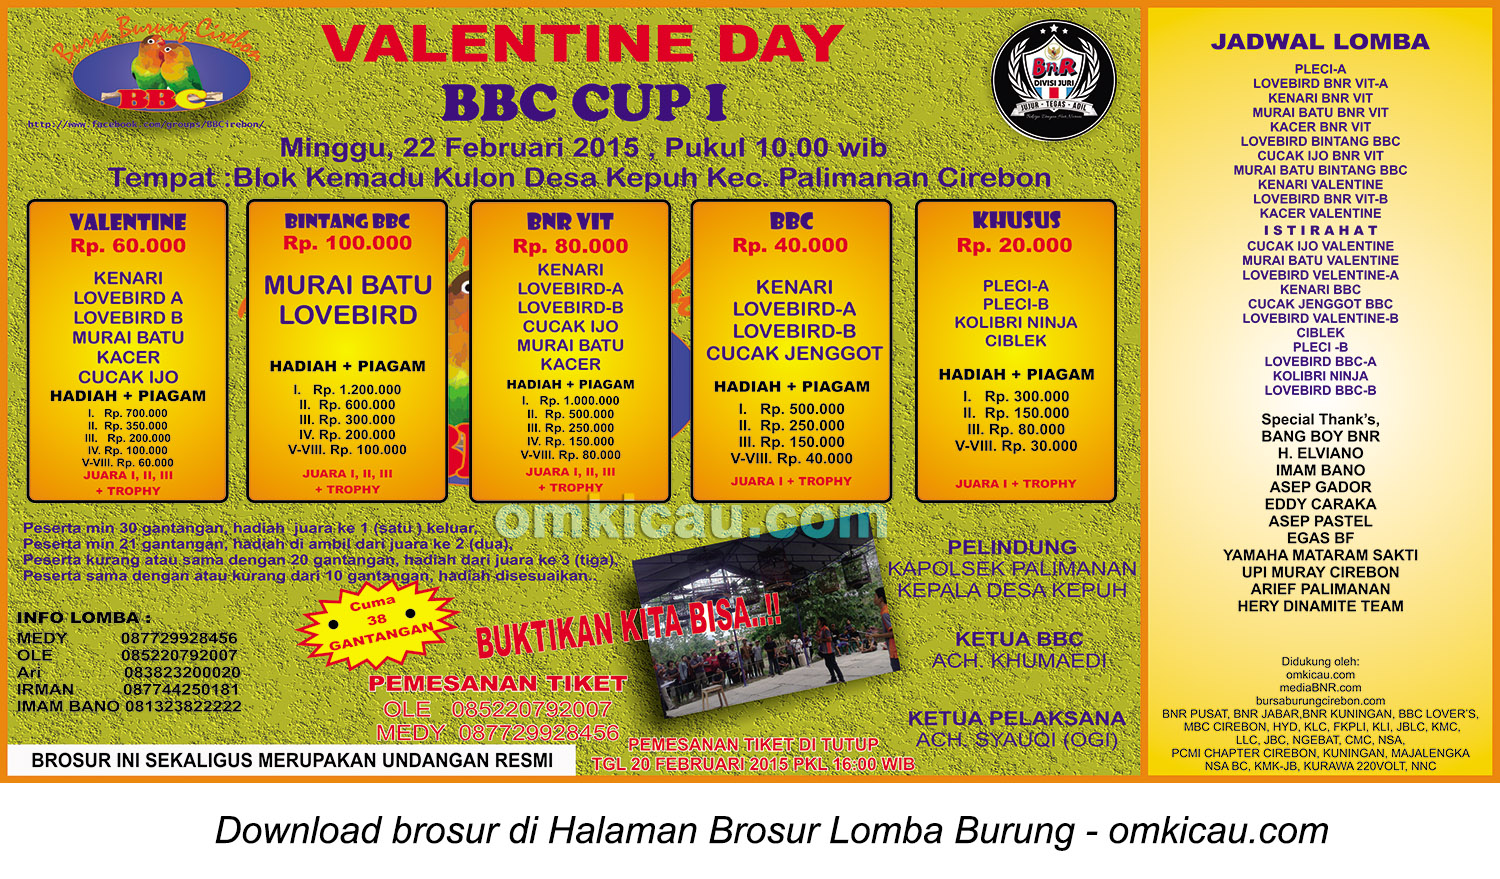 Brosur Lomba Burung Berkicau Valentine Day BBC Cup I, Cirebon, 22 Februari 2015